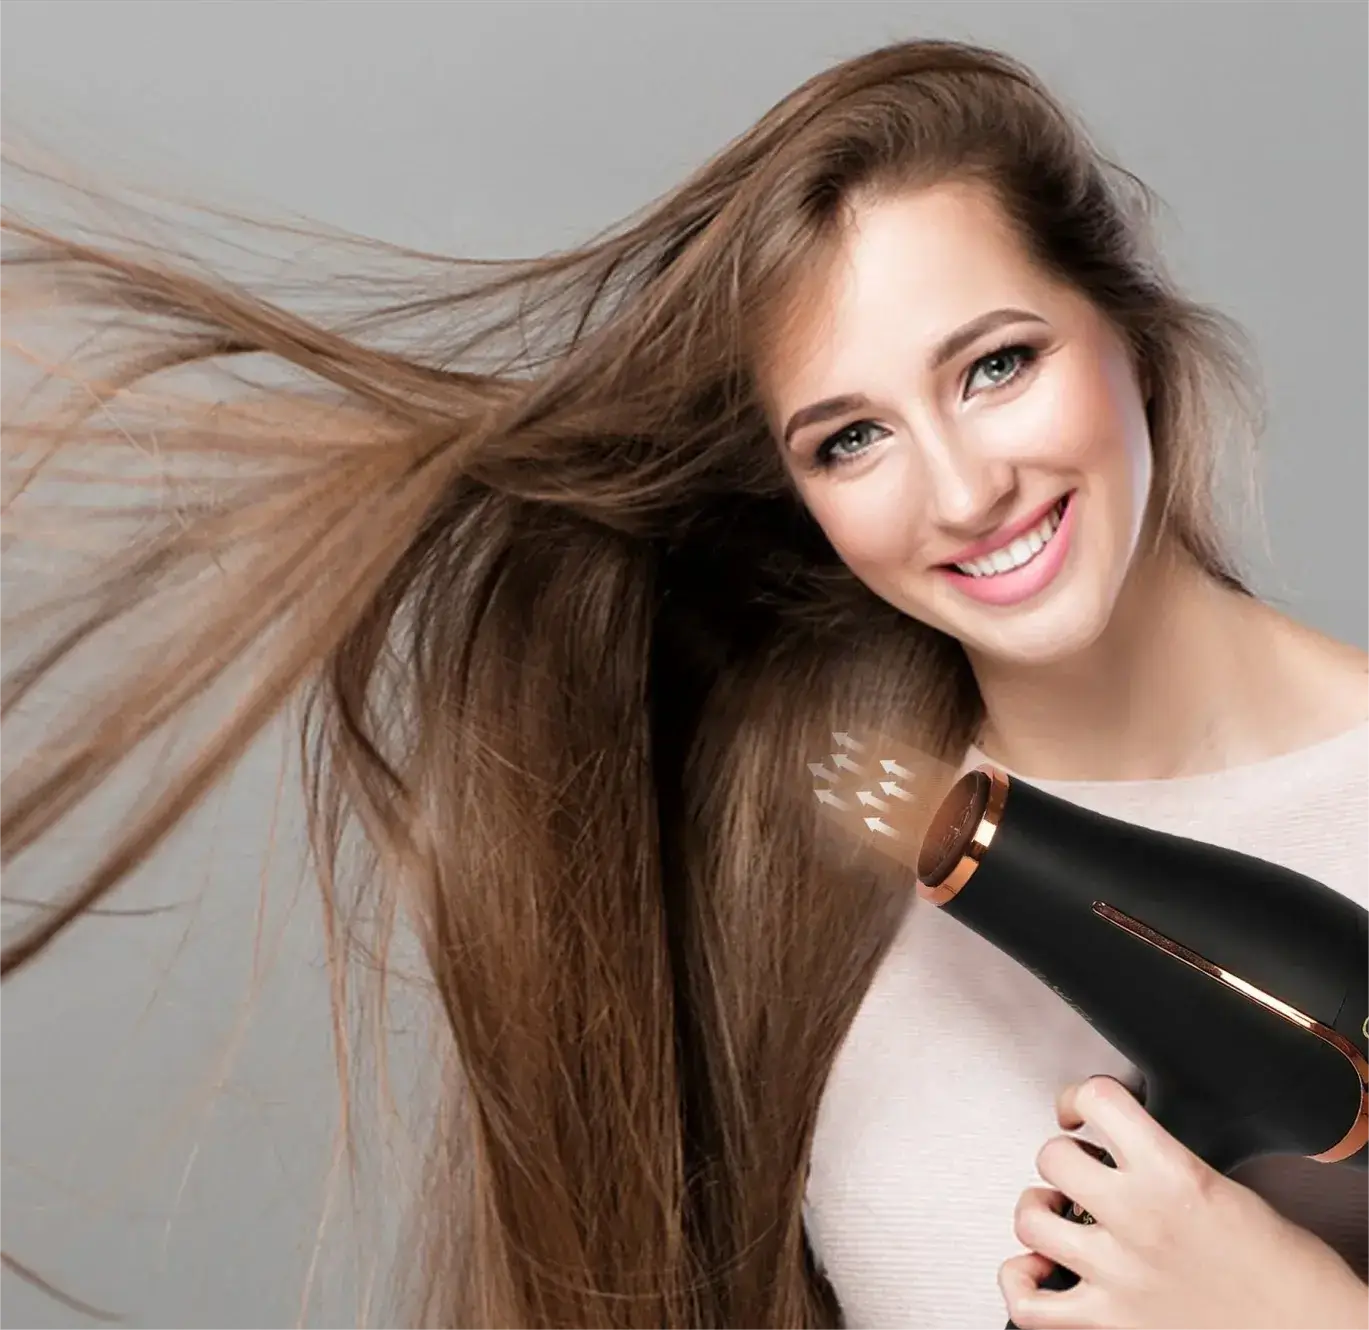 Smiling woman using hairdryer on long, flowing brown hair.